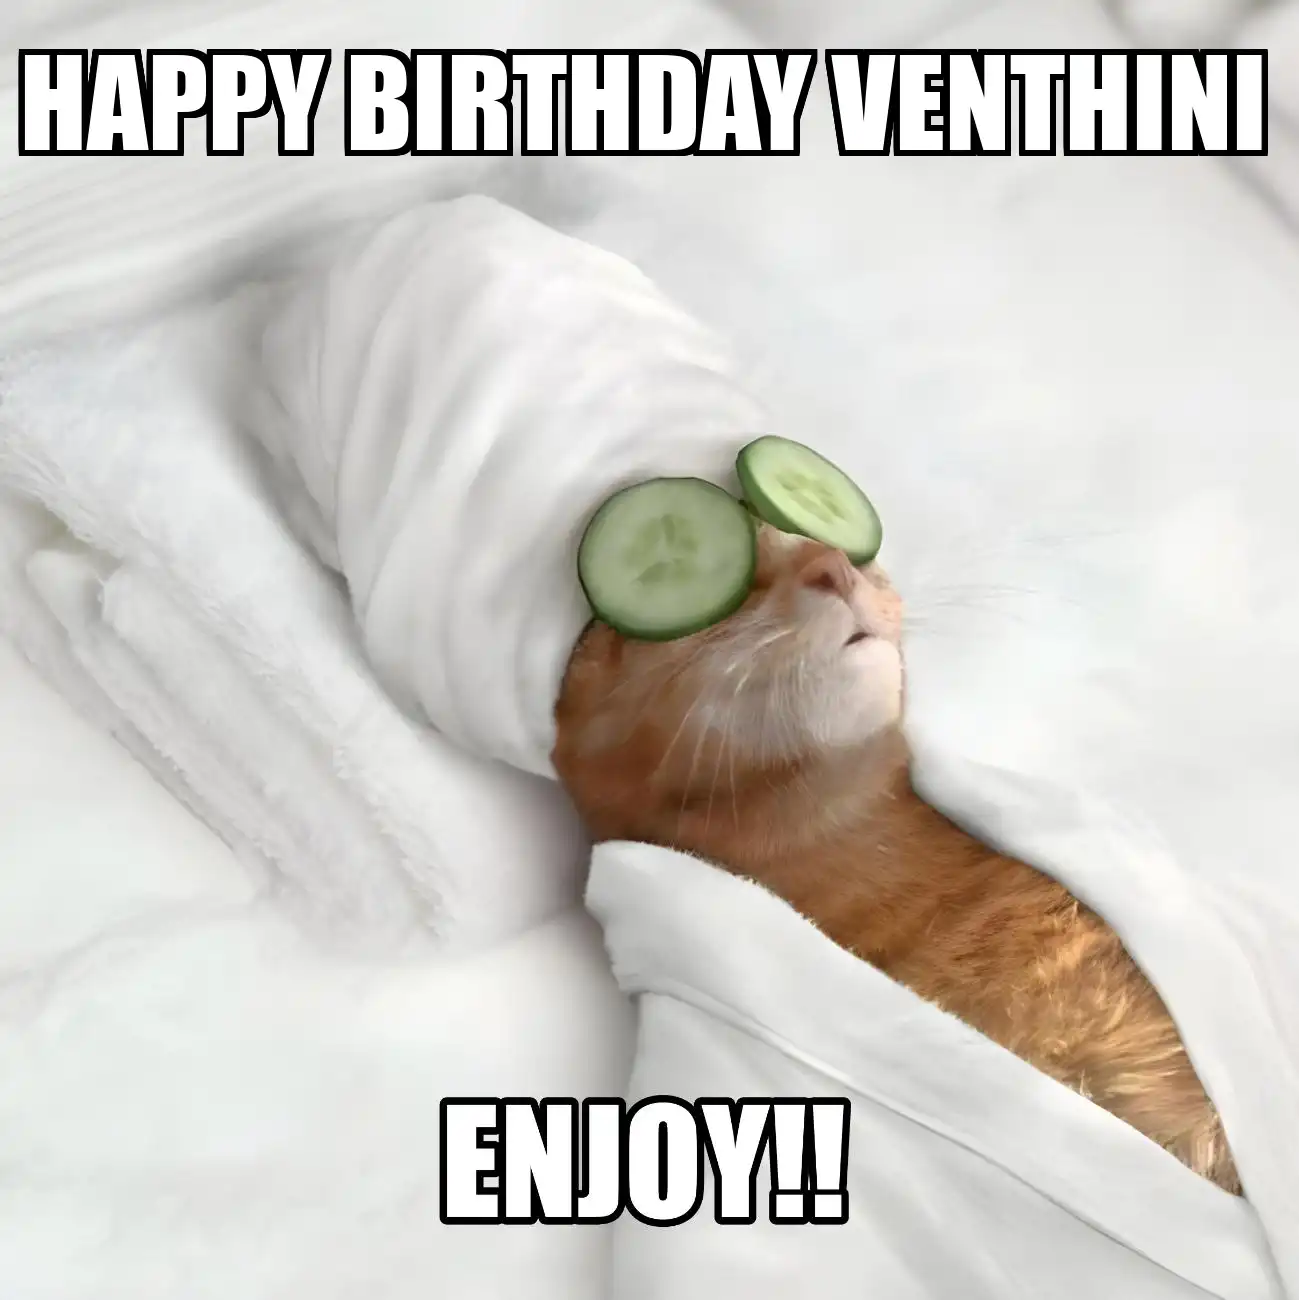 Happy Birthday Venthini Enjoy Cat Meme